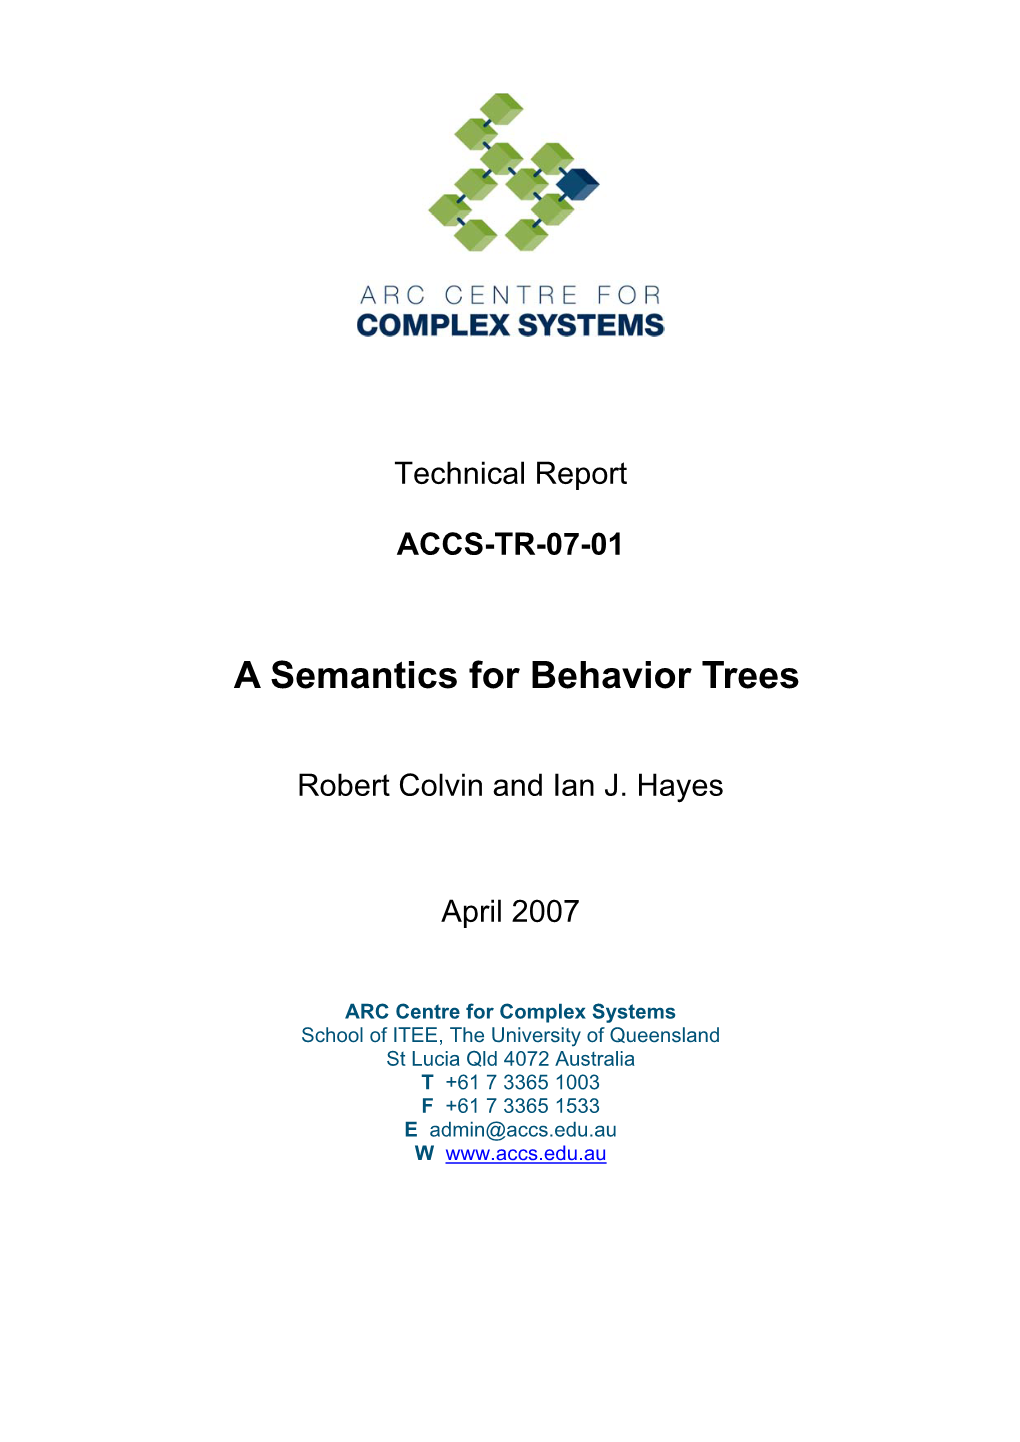 A Semantics for Behavior Trees